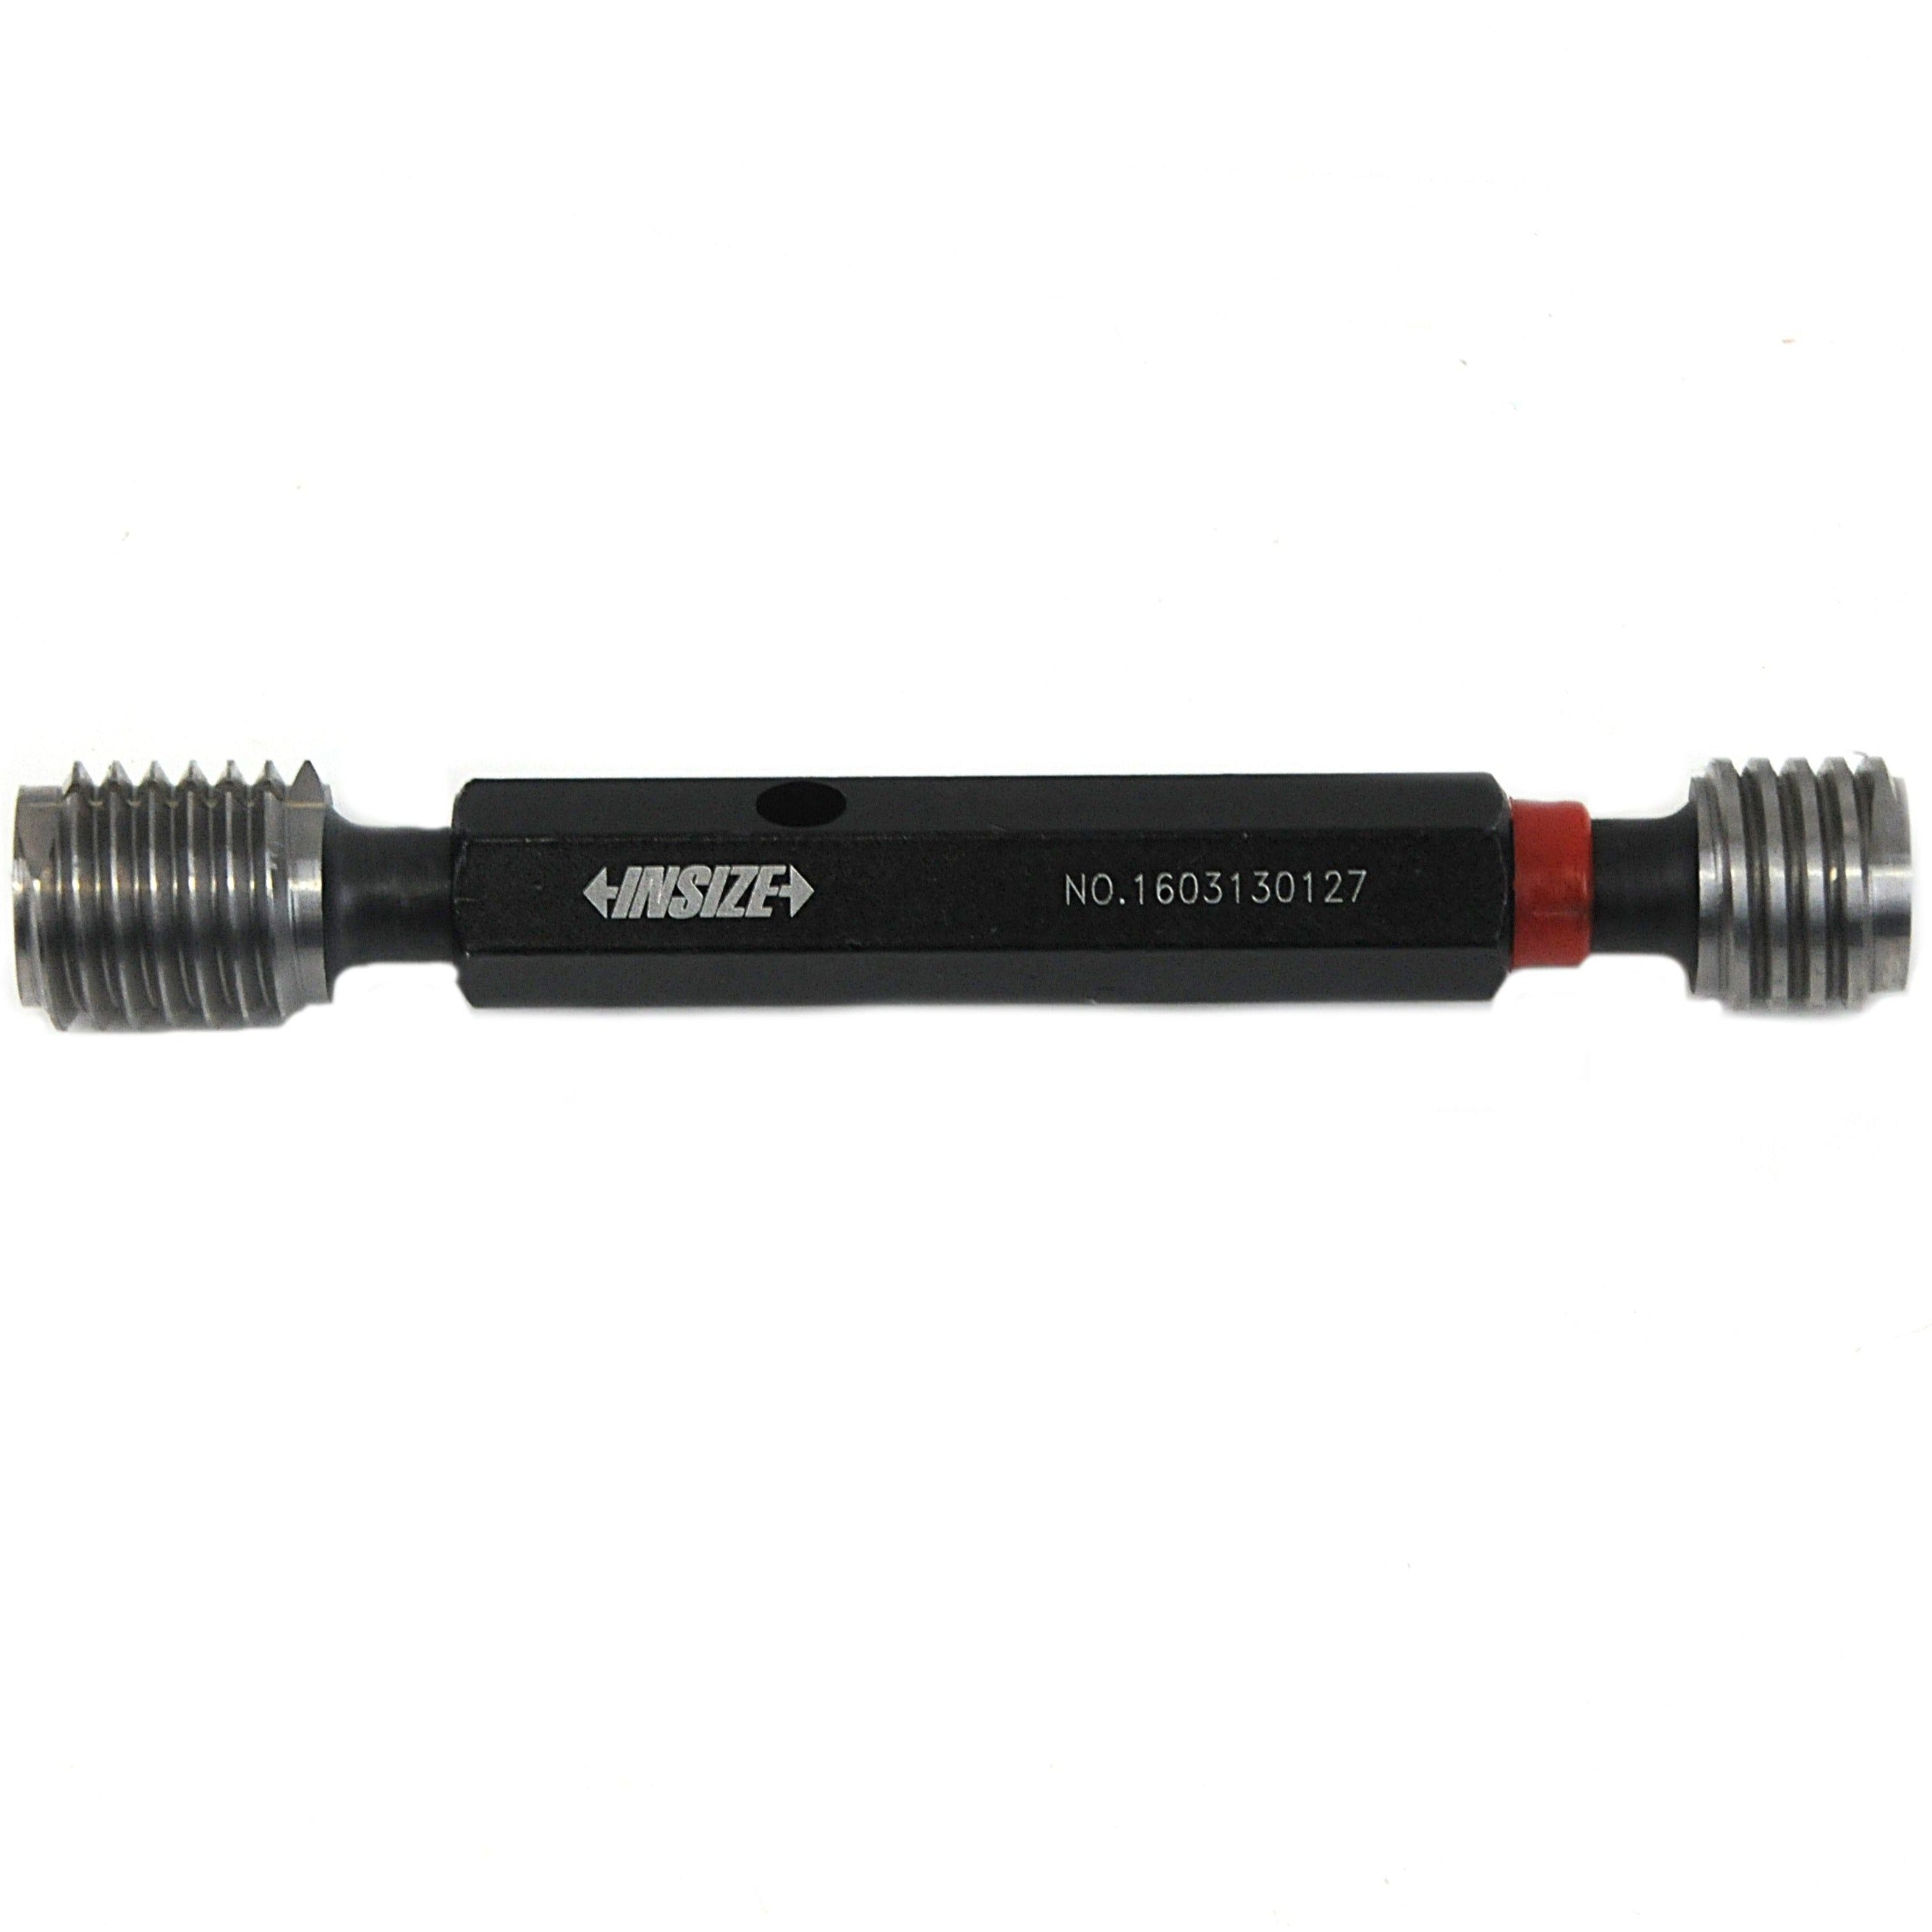 Insize Thread GO NOGO Plug Gauge M18x2.5mm Series 4130-18